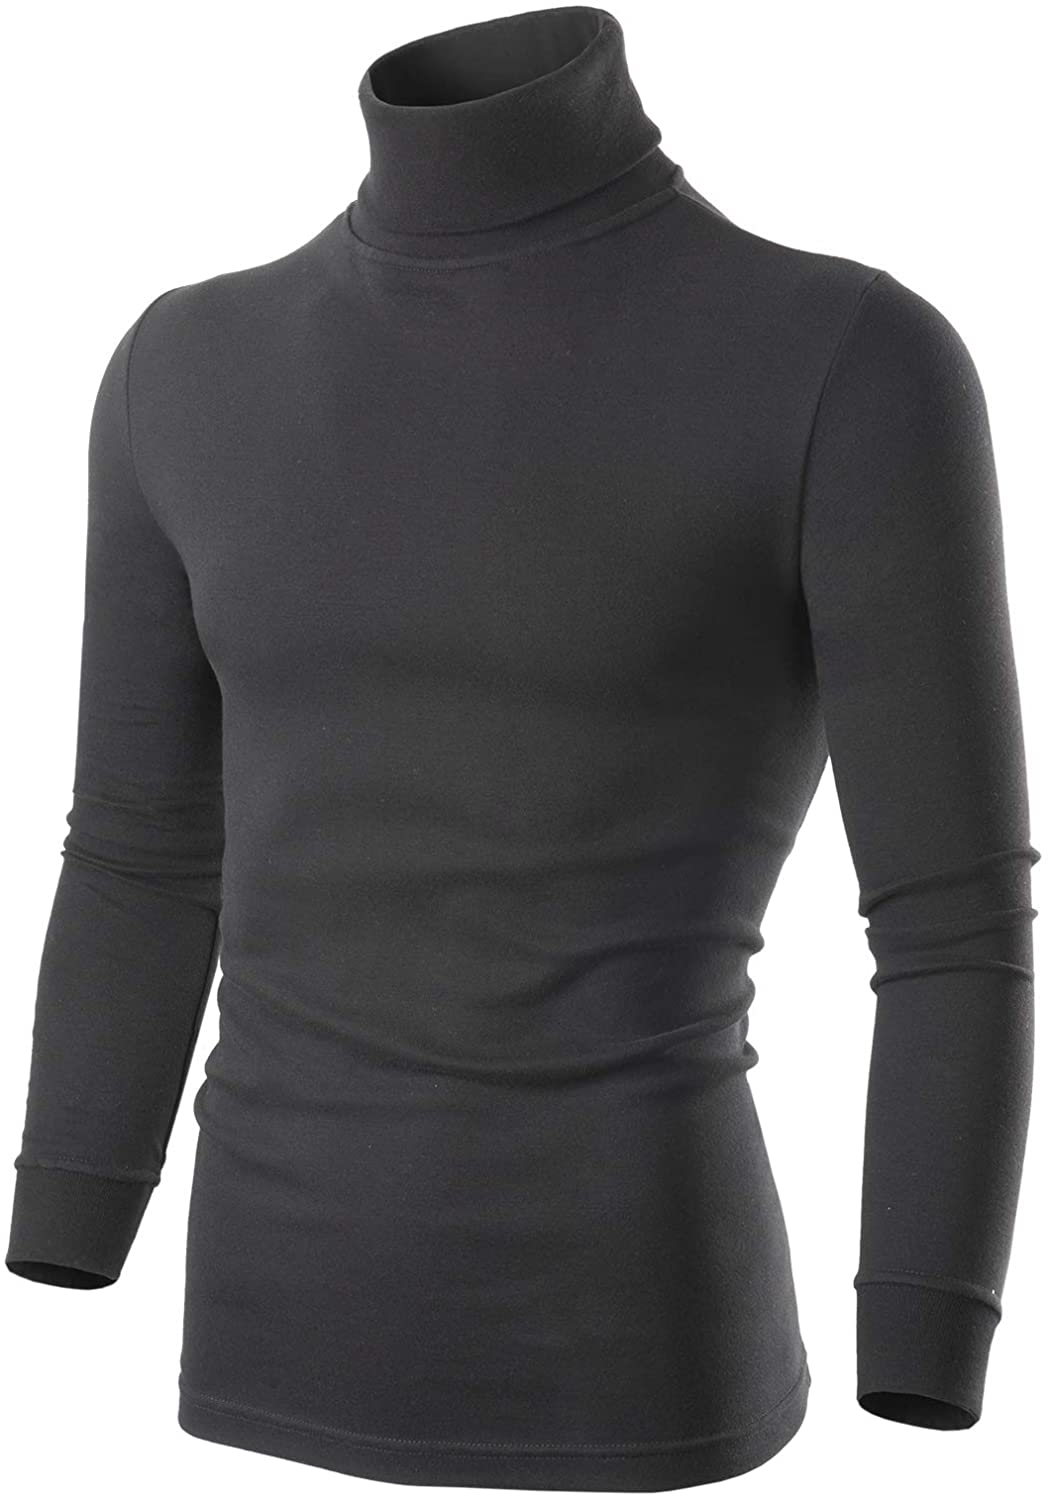 HOP FASHION Turtleneck Sweater Thermal Underwear Long Sleeve Mock Neck Base Layer Shirt for Men 